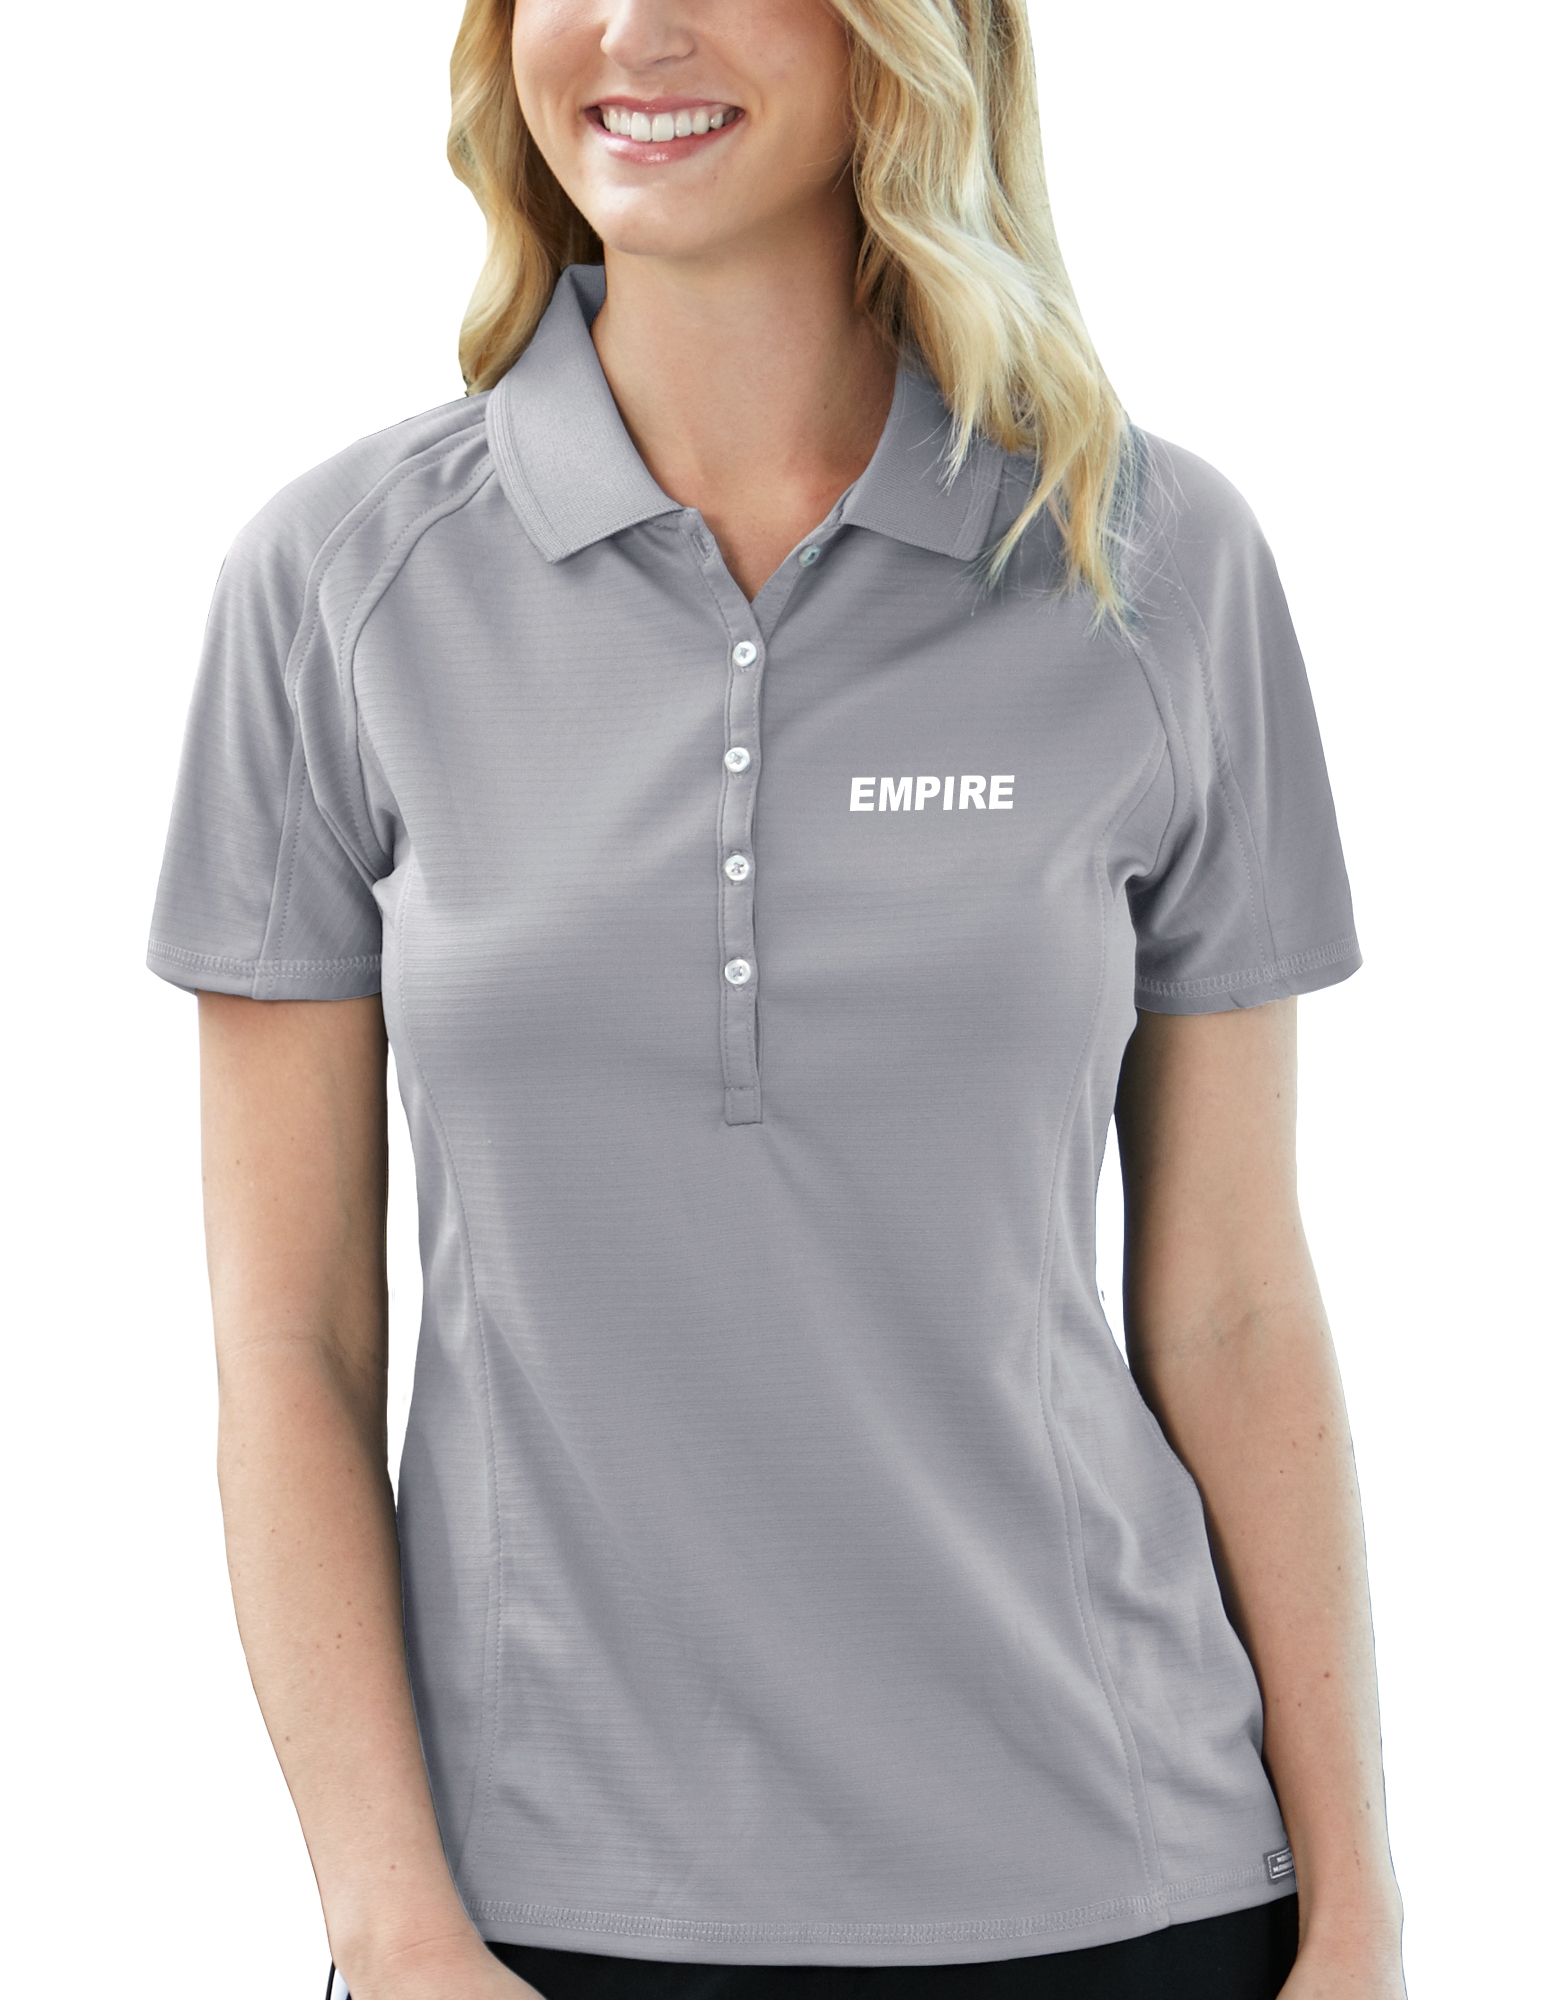 Pro Celebrity KLM289 Empire Ladies Polo Shirts